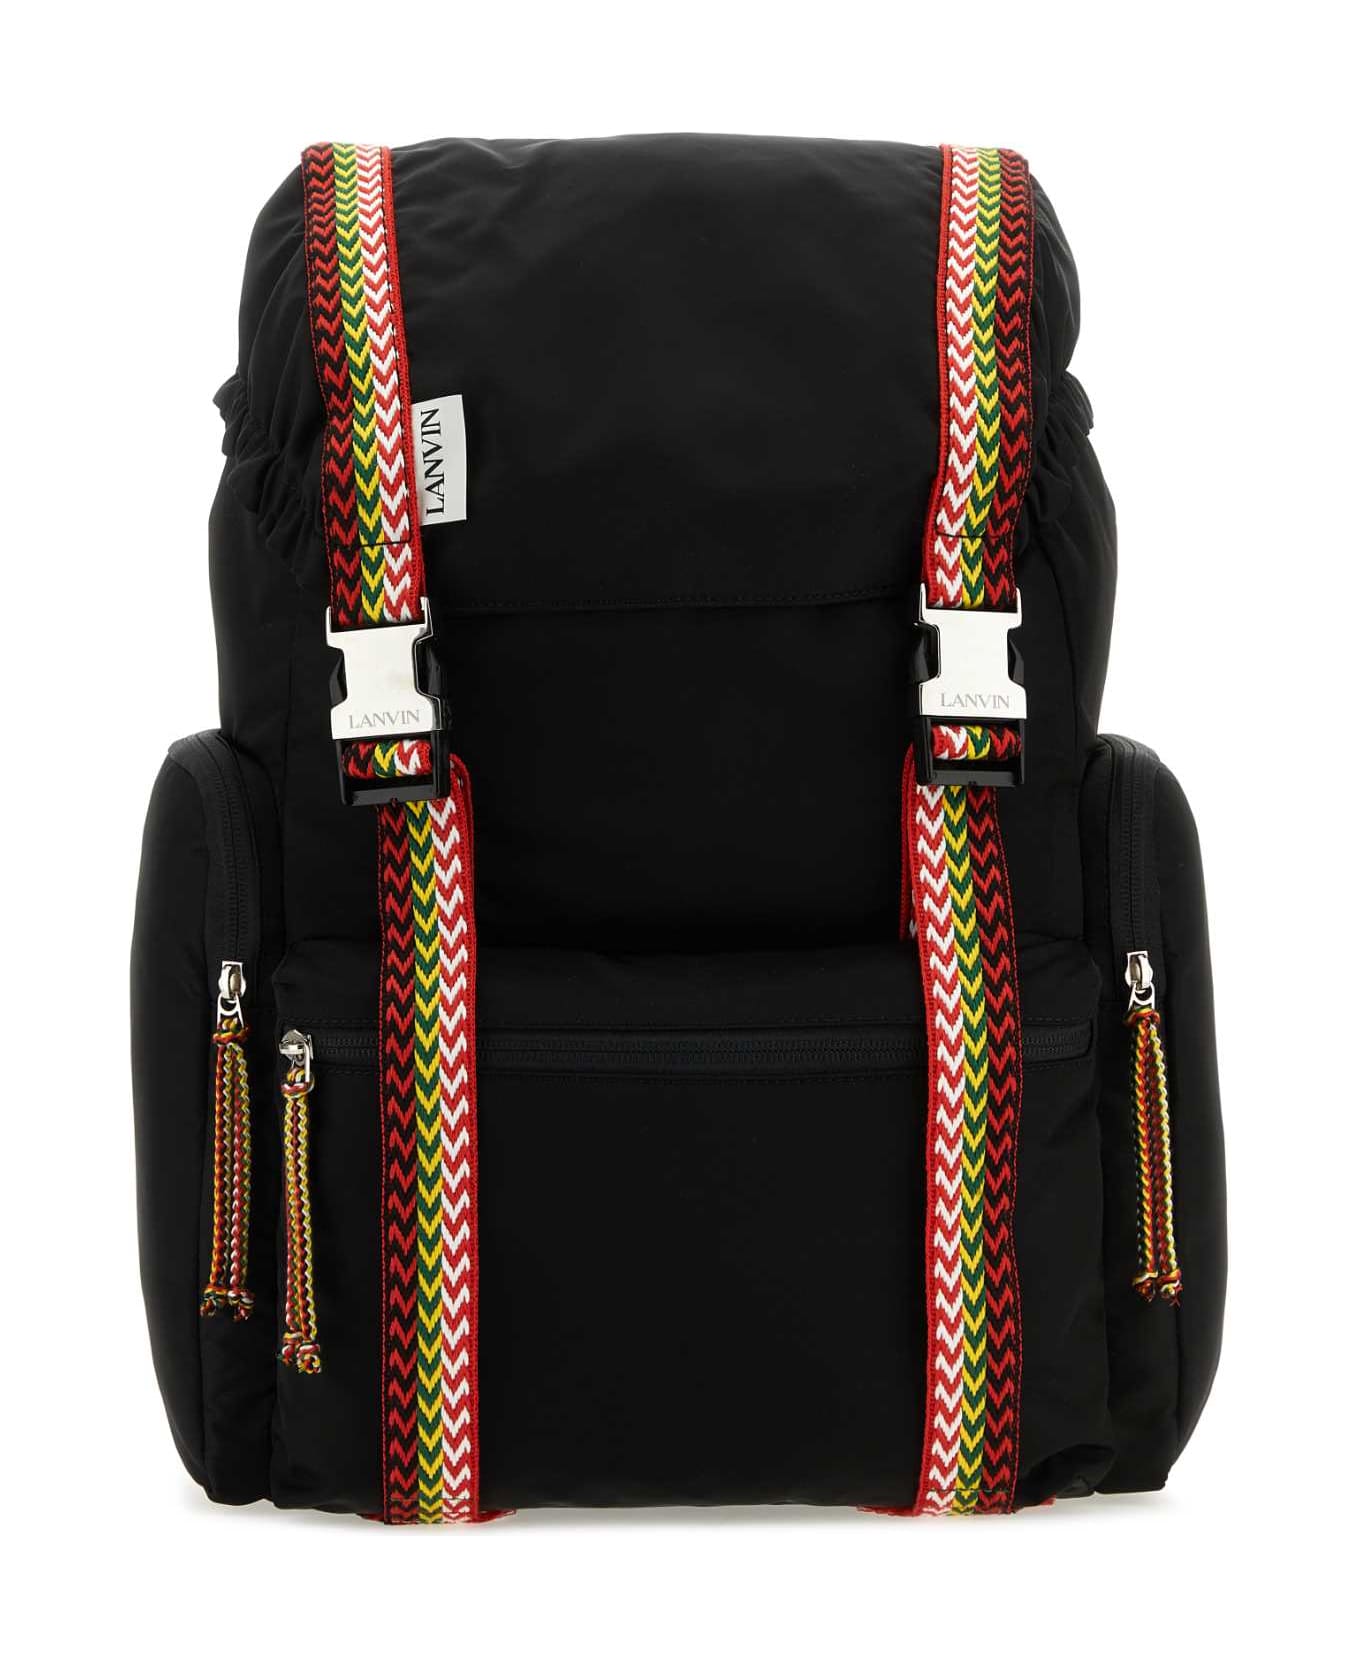 Lanvin Black Fabric Curb Backpack - Black